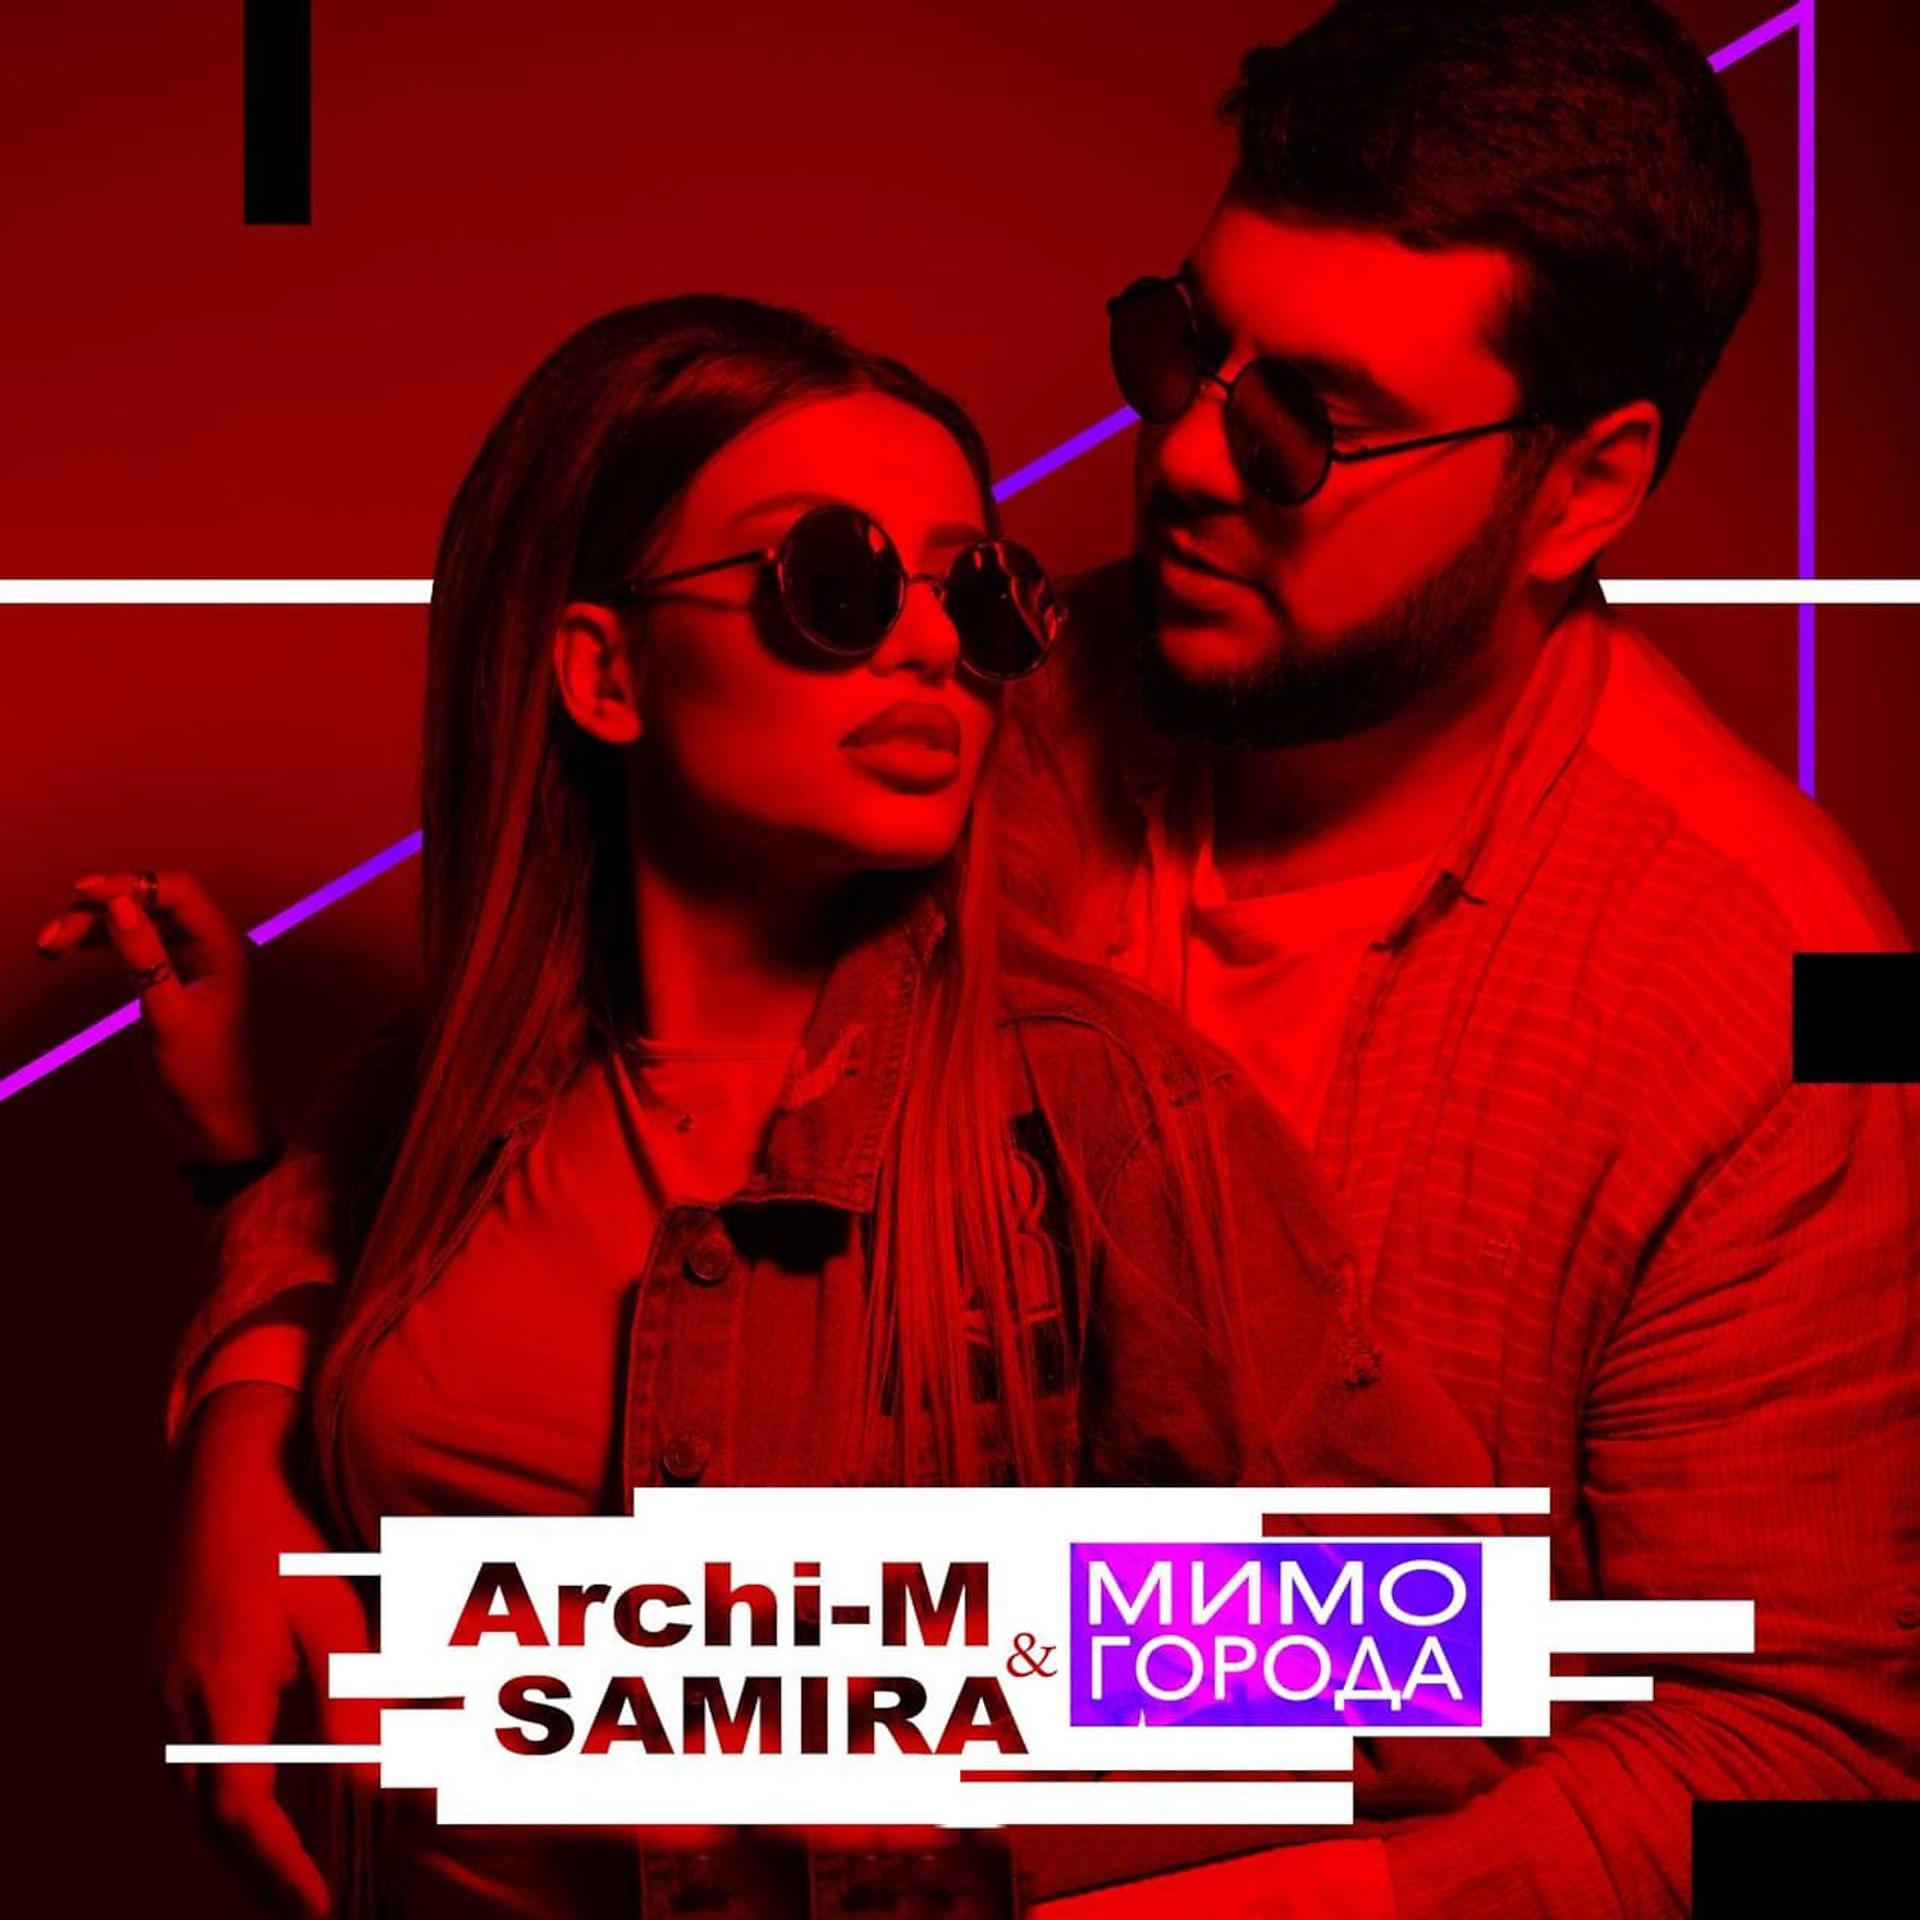 Постер к треку Archi-M, SAMIRA - Мимо города